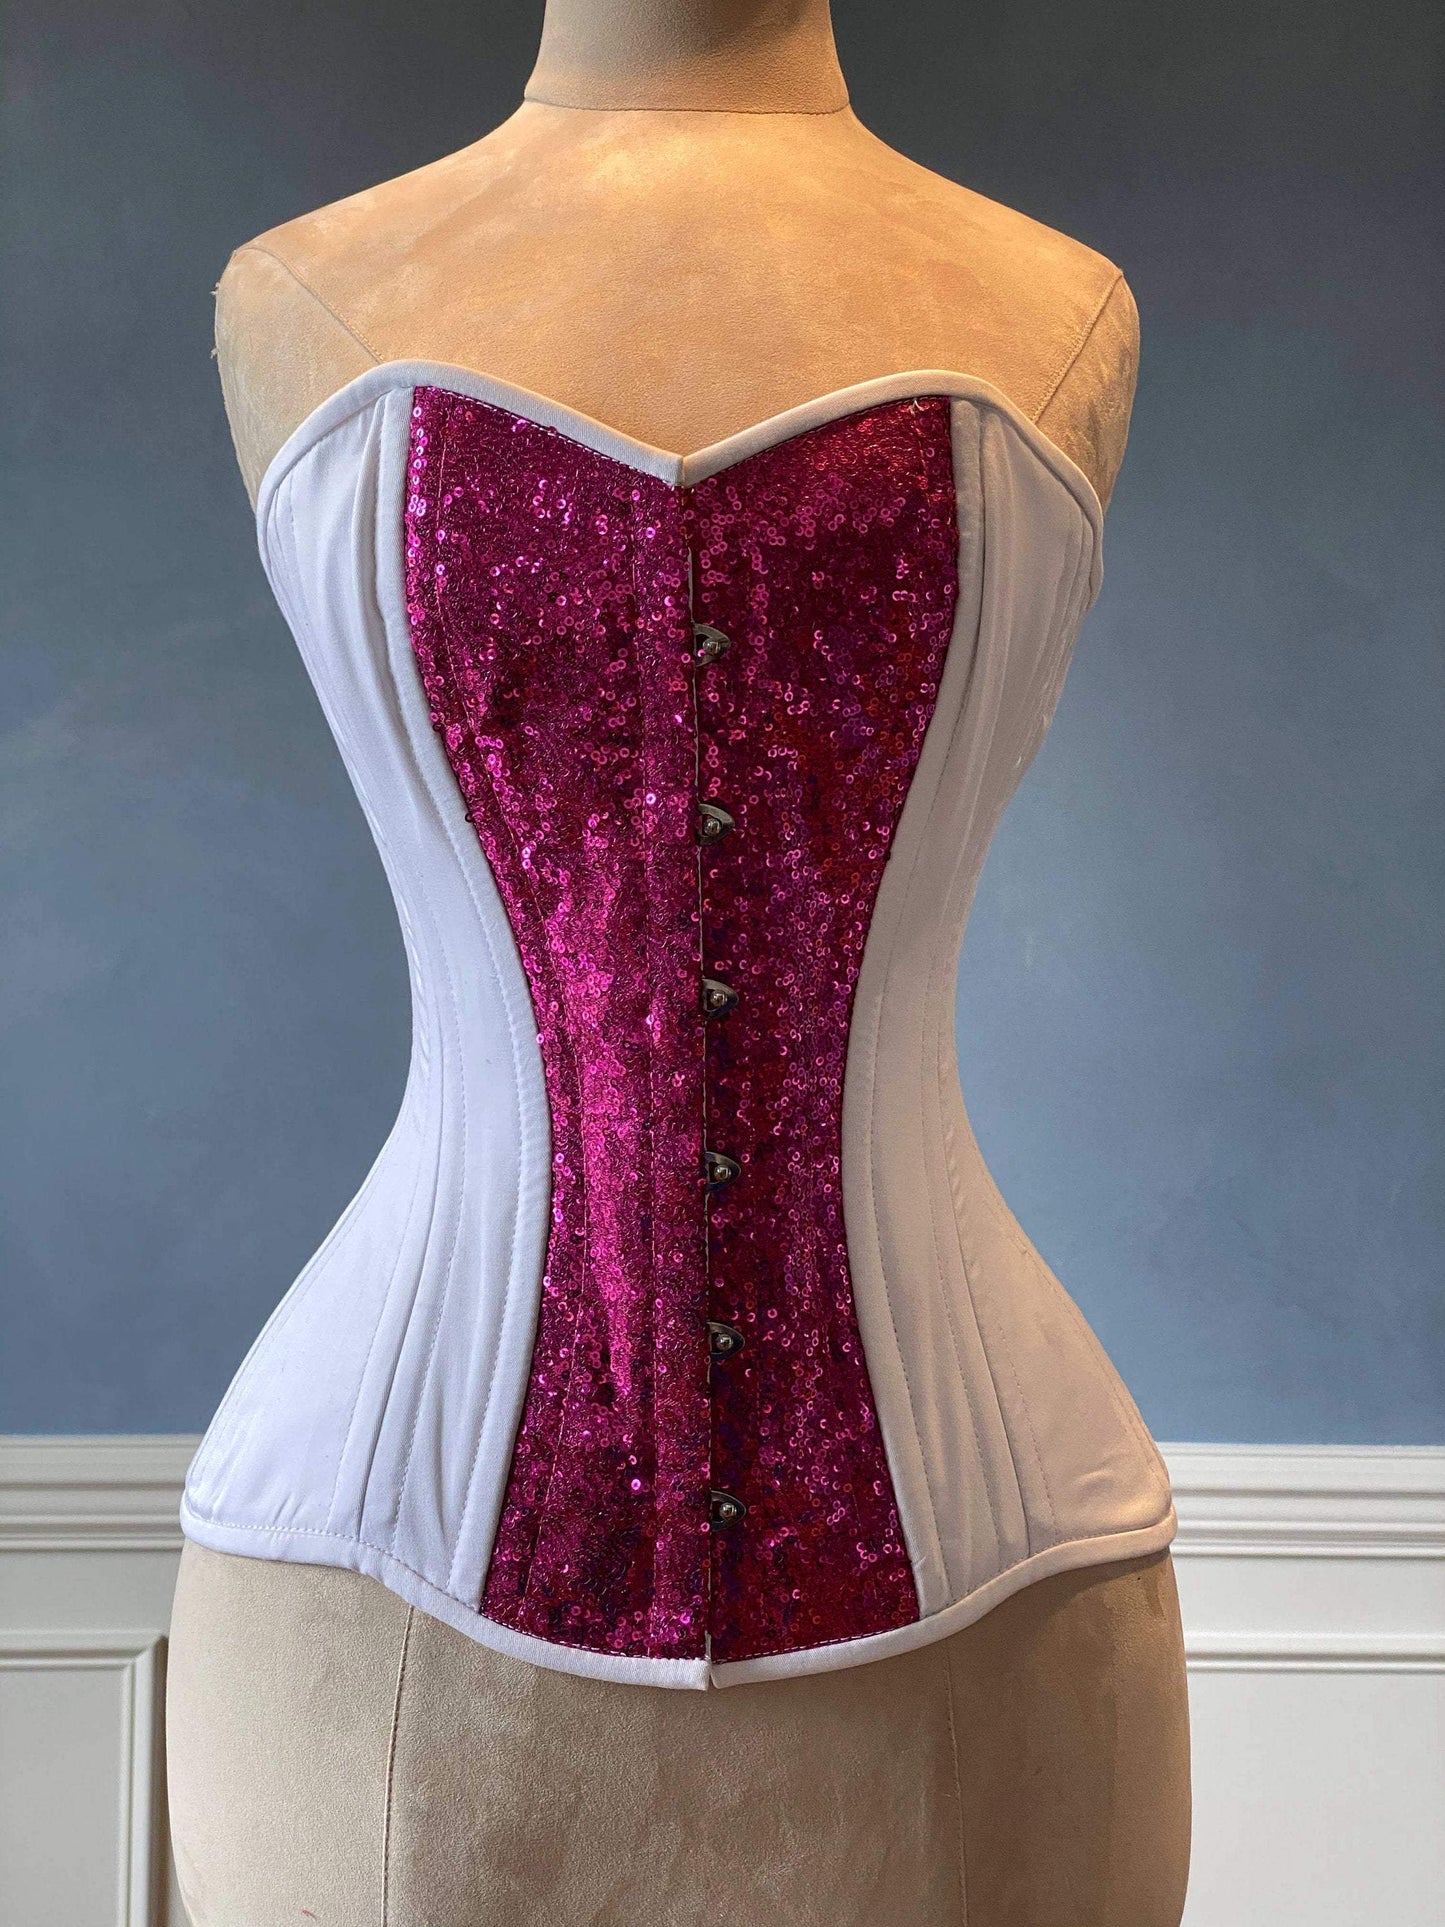 Real steel boned underbust underwear pink corset from transparent